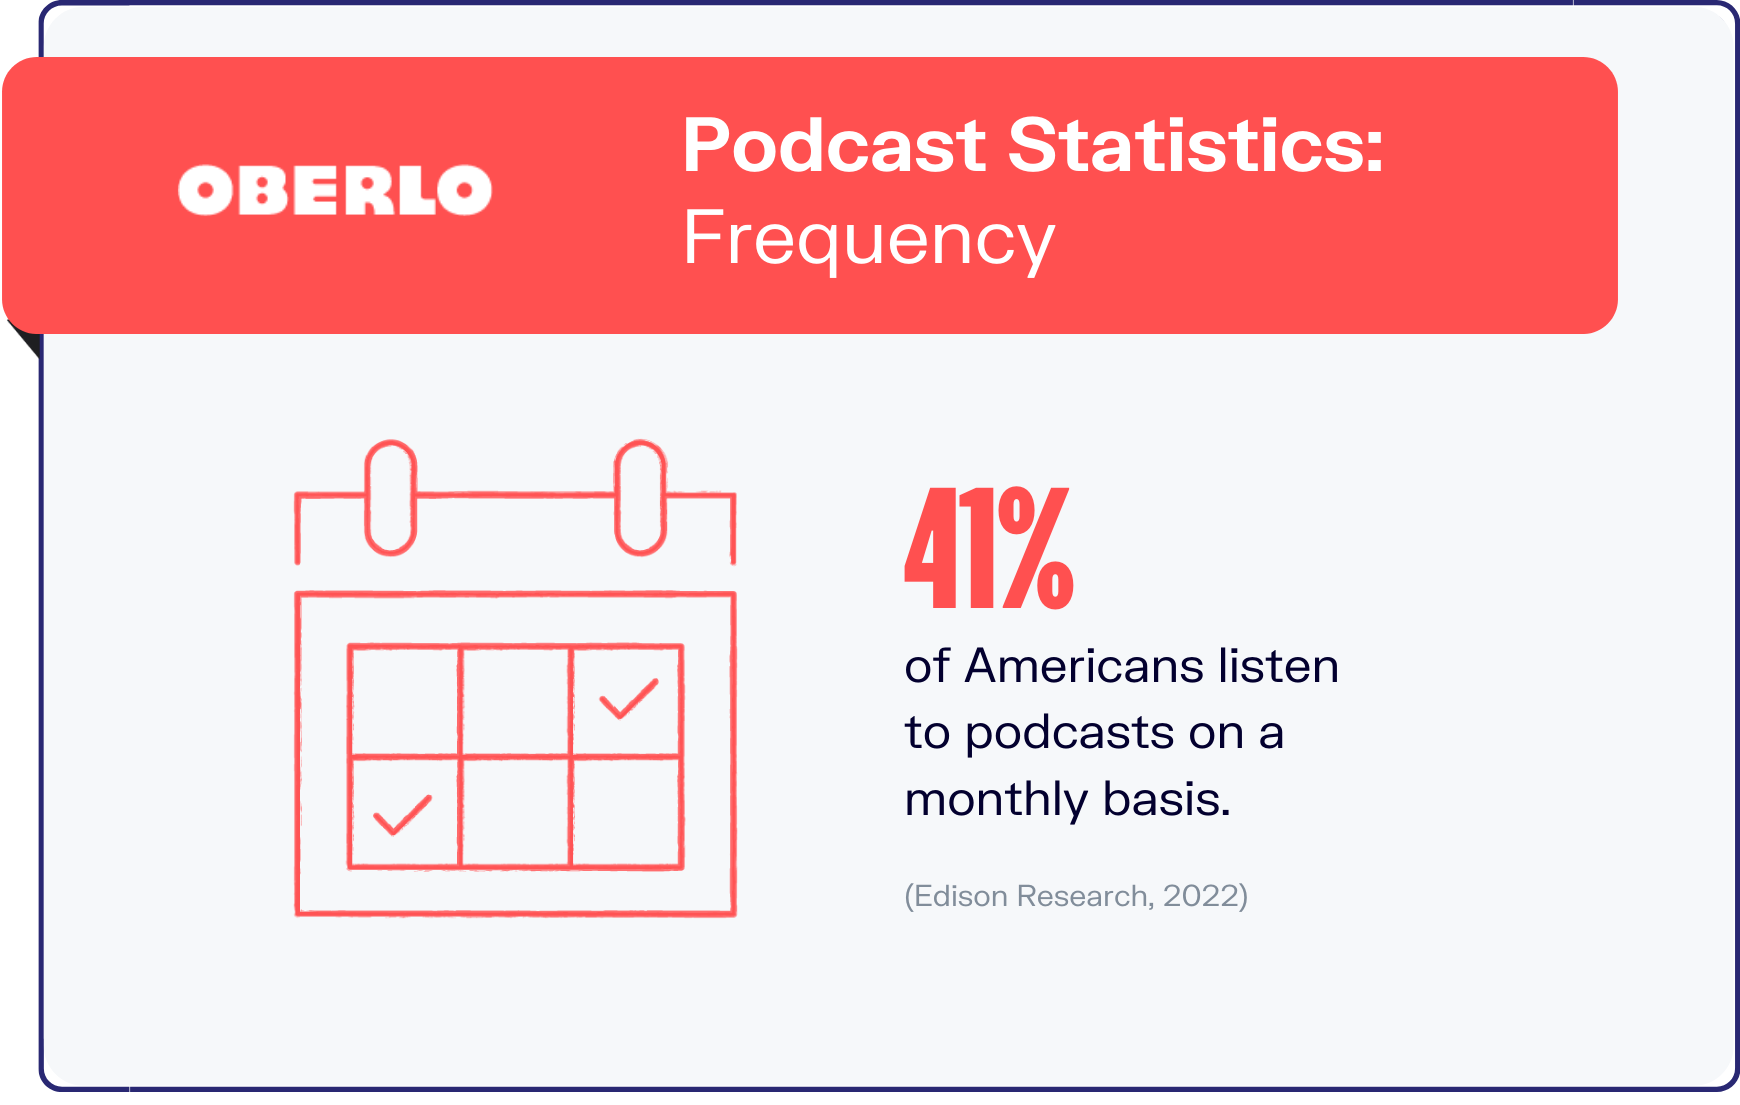 podcast statistics graphic5